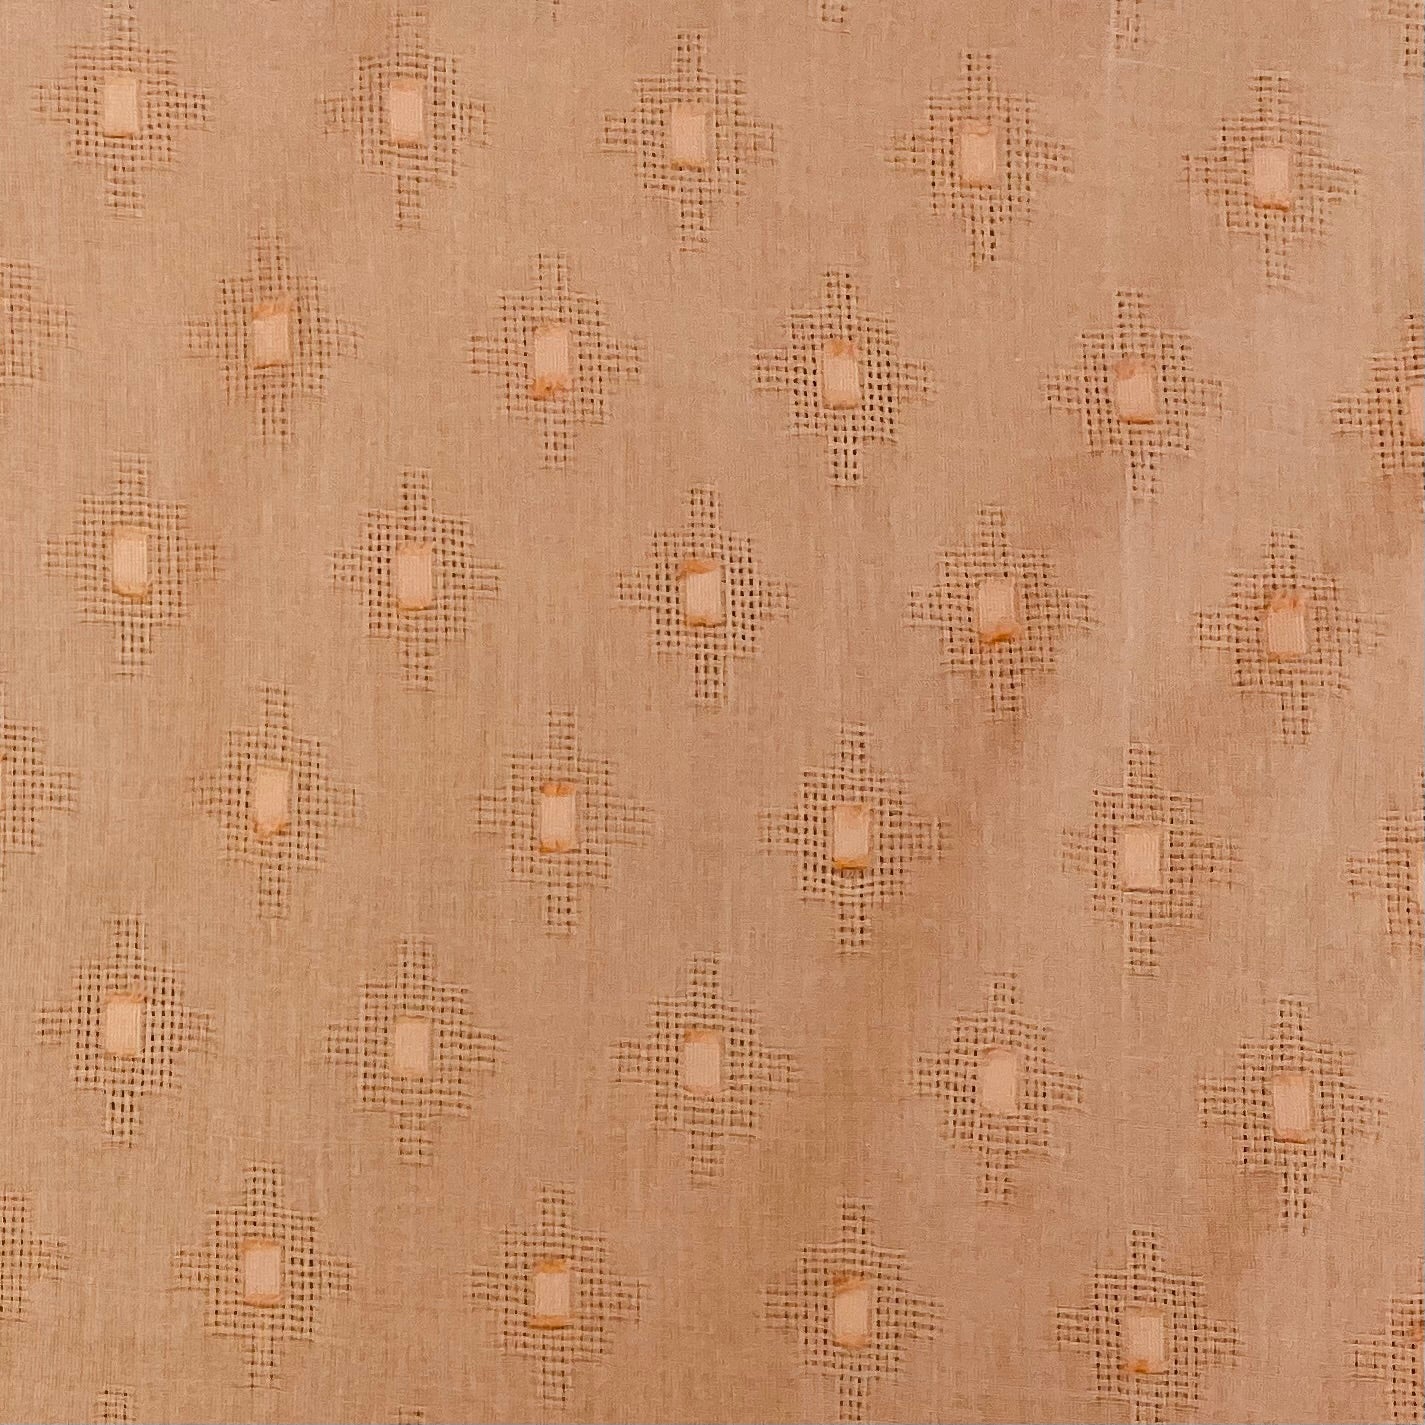 Orange Solid Jacquard Cotton Fabric, 48 Inches Plain Weave, TU-1976